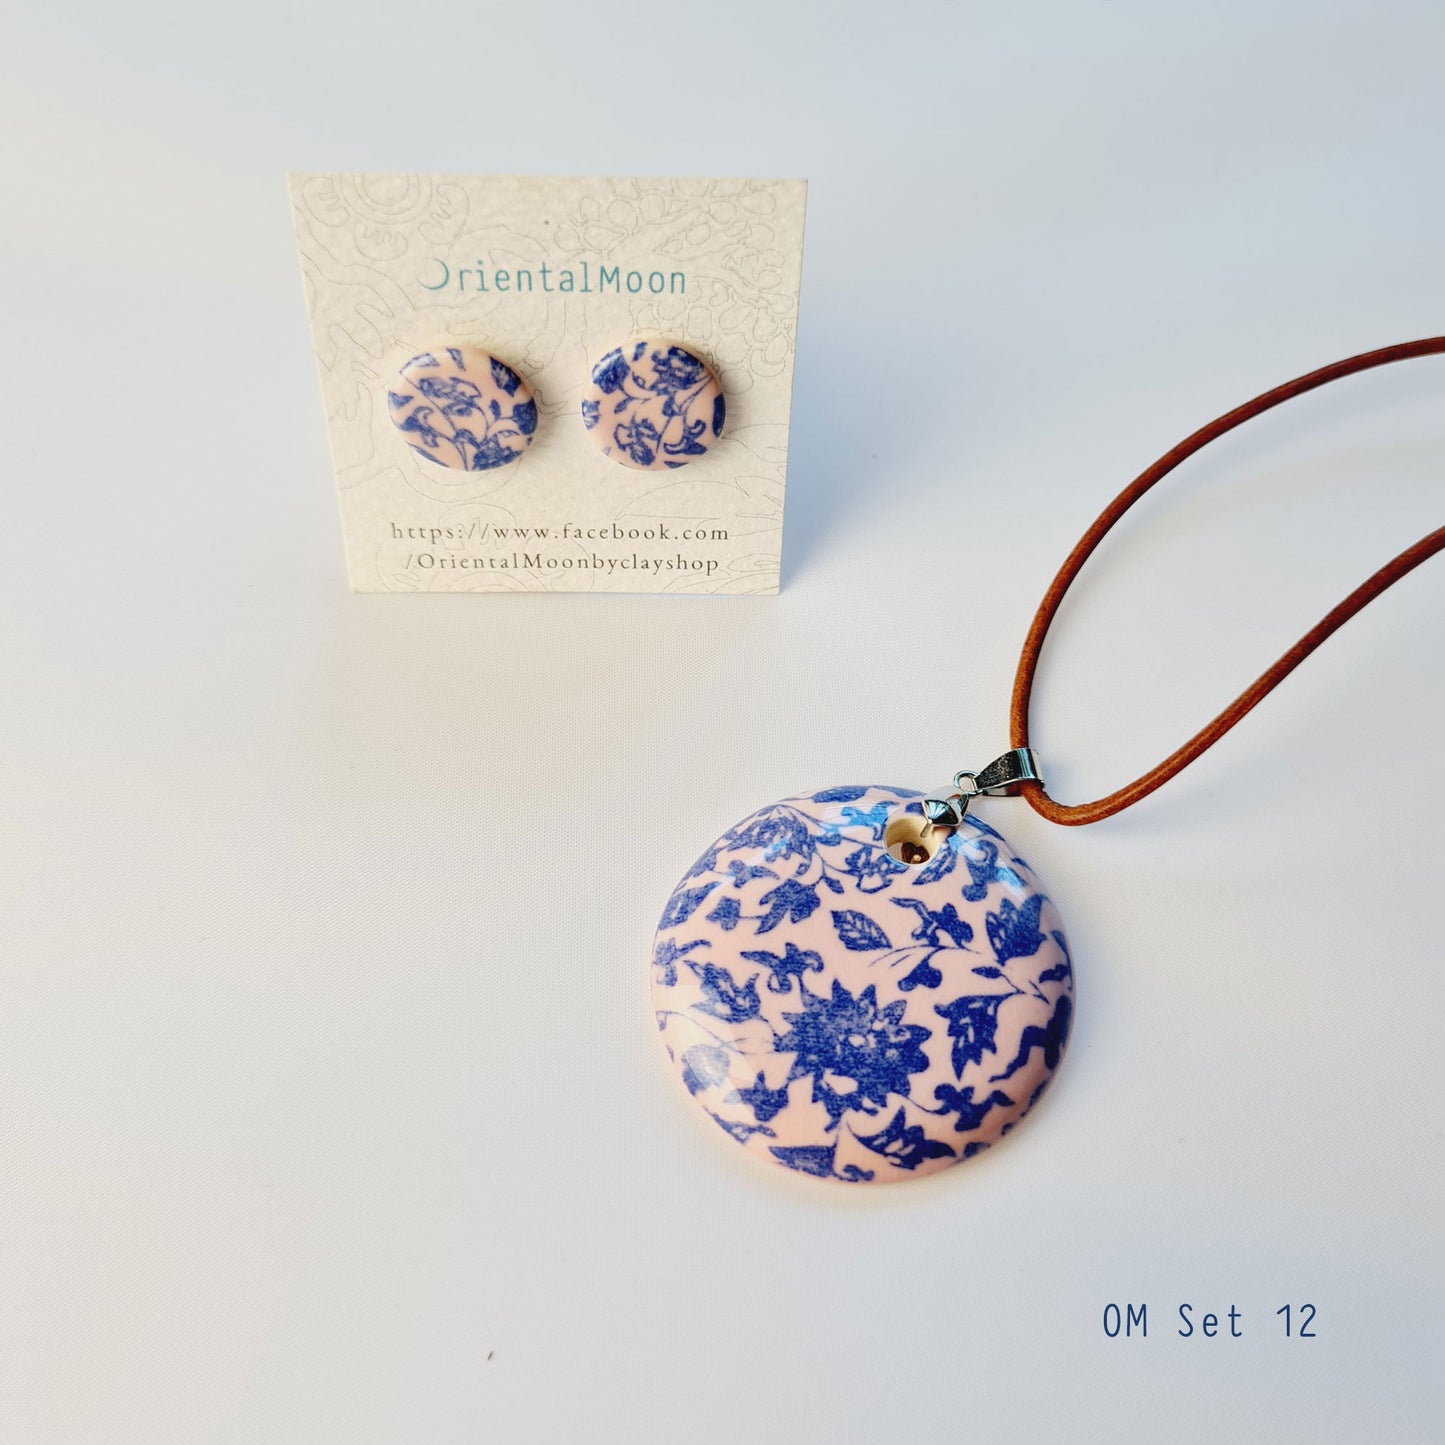 Blue on Light pink ceramic pendant set with earrings OM12 ชุดสร้อยคอจี้เซรามิคพร้อมต่างหูเข้าชุด OM12